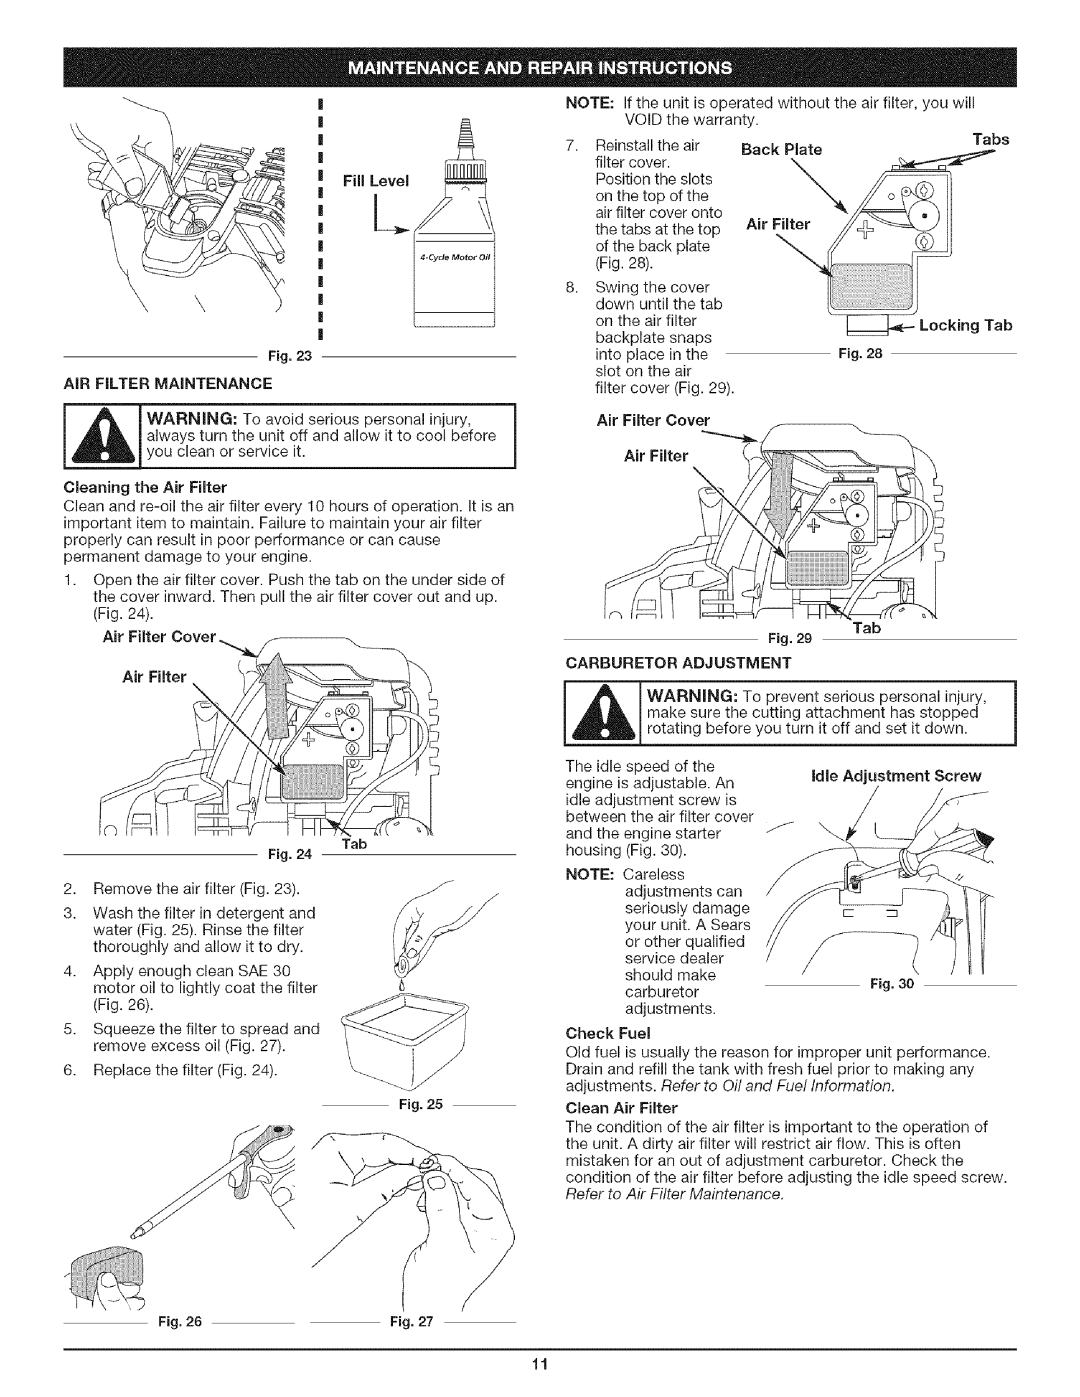 Craftsman 316.79197 manual Idle Adjustment Screw, adjustments. Refer to Oil and Fuel Information 